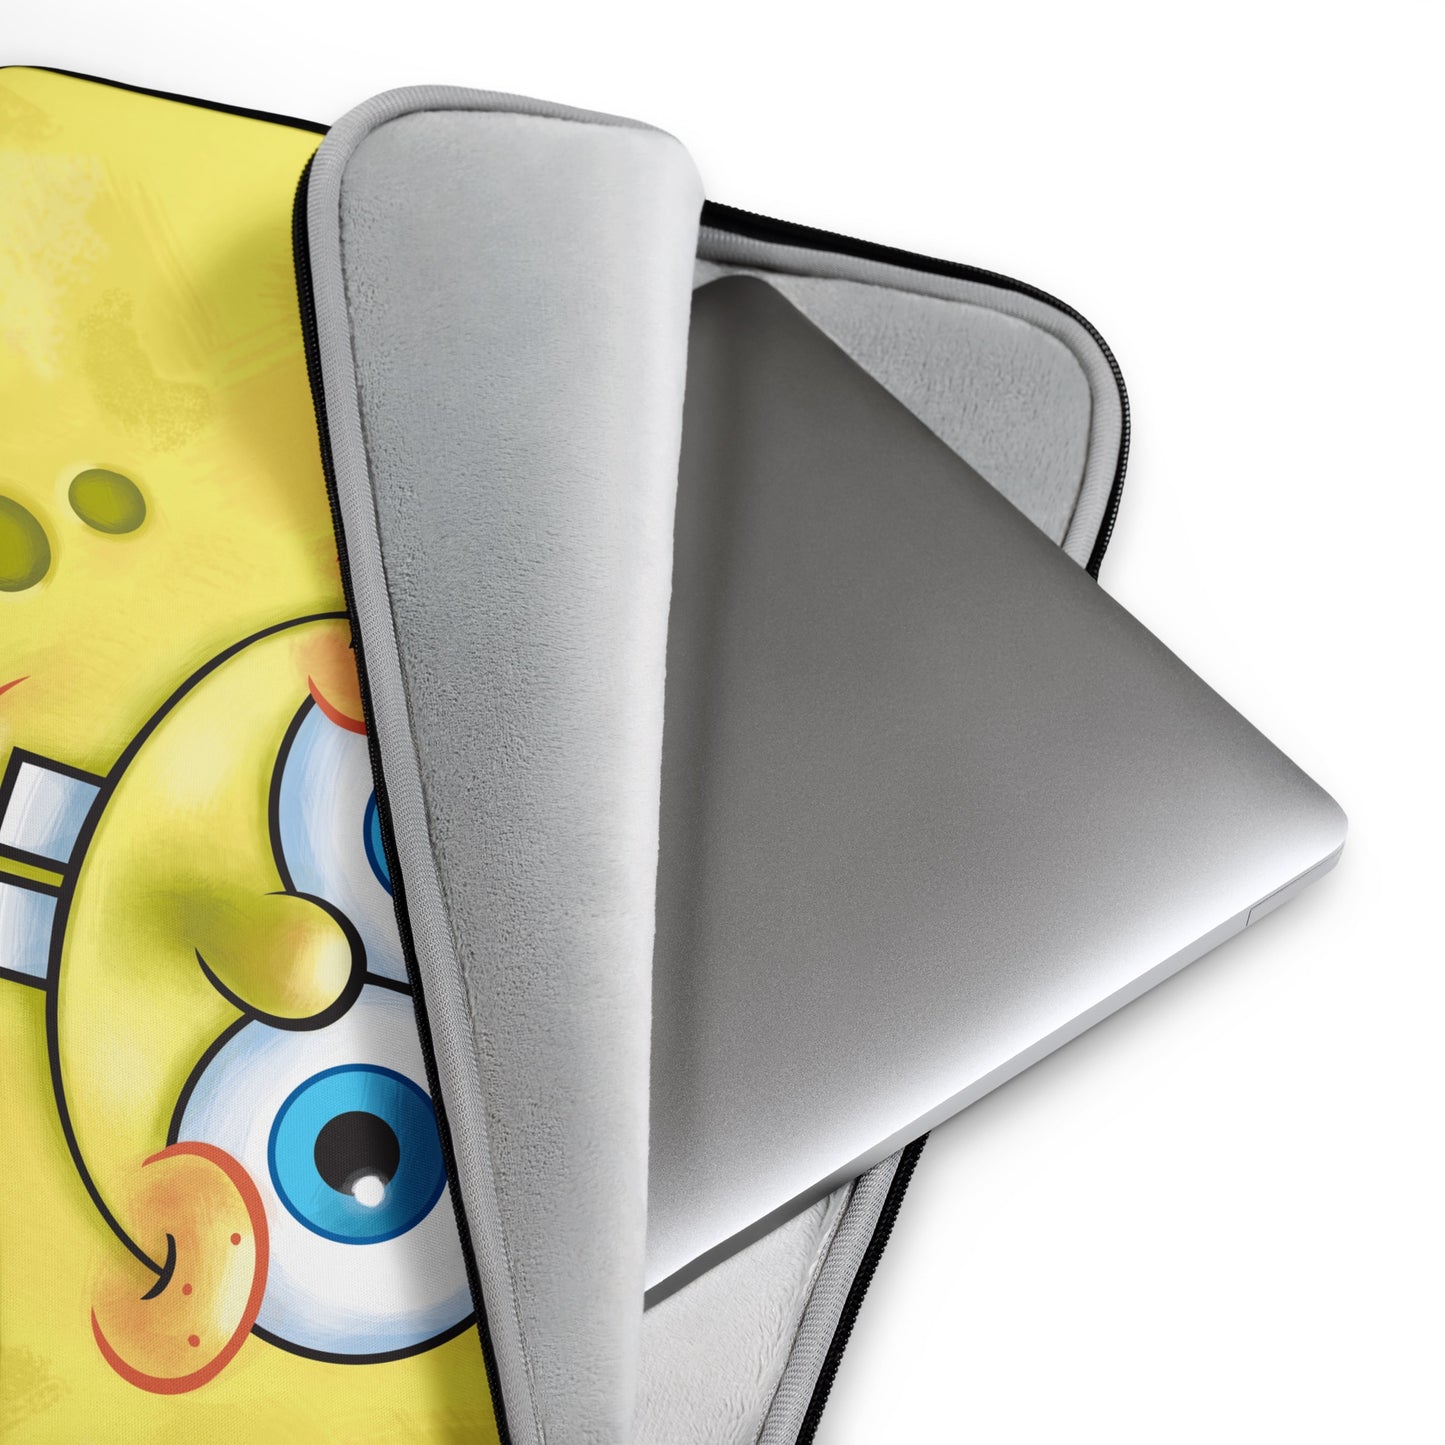 Spongebob Face Laptop Sleeve